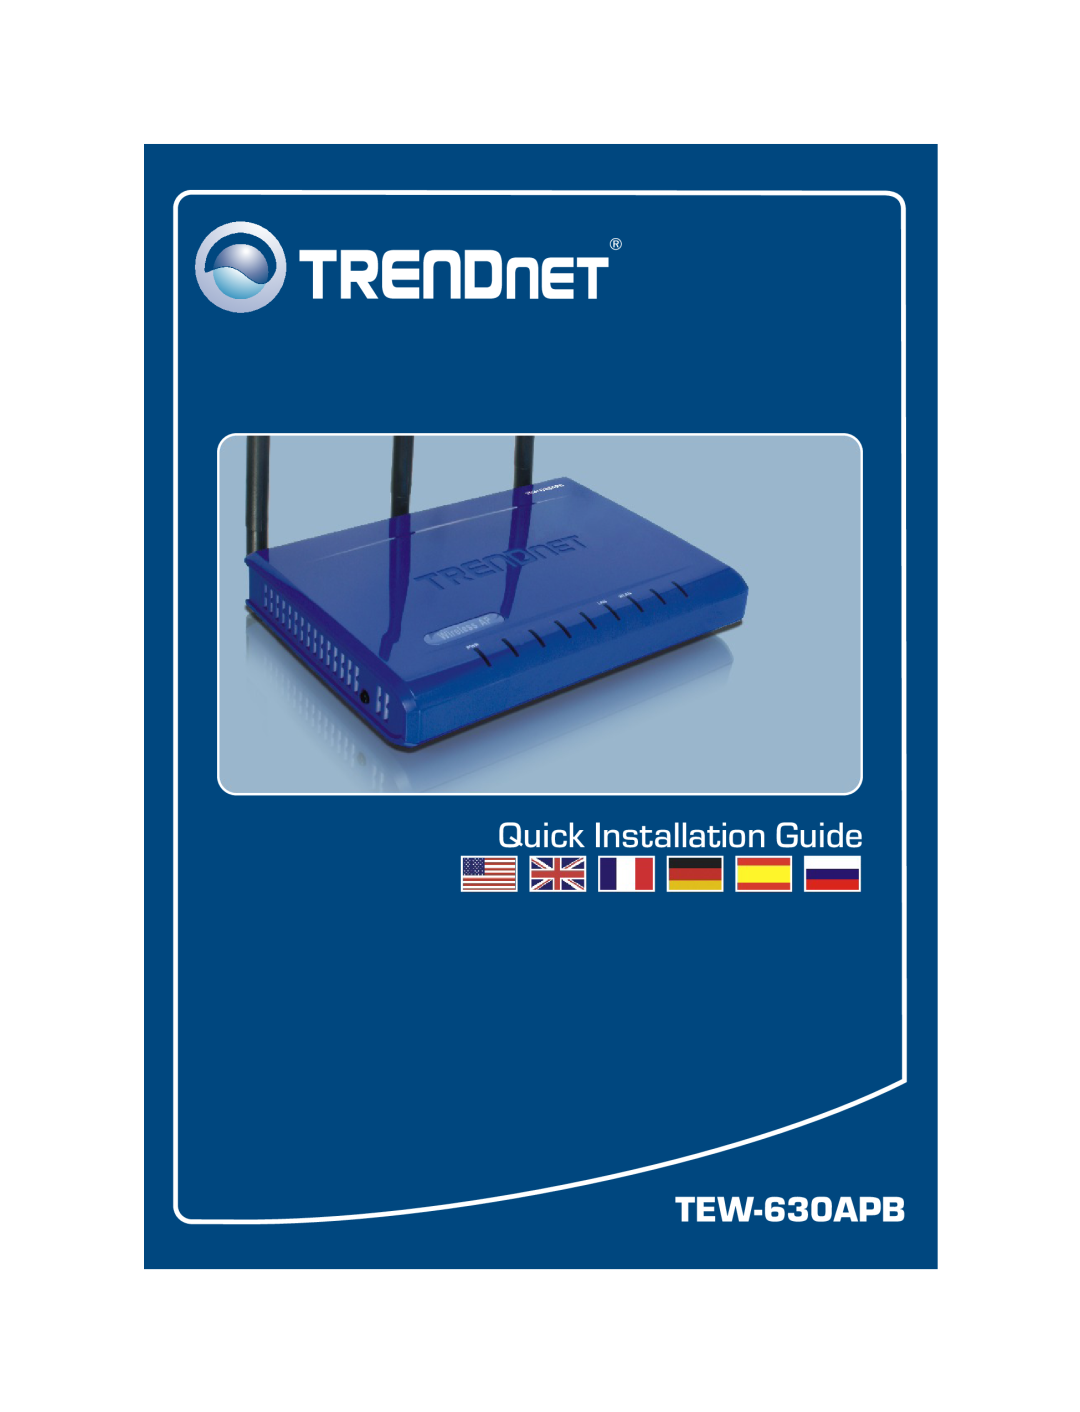 TRENDnet TEW-630APB manual Quick Installation Guide 